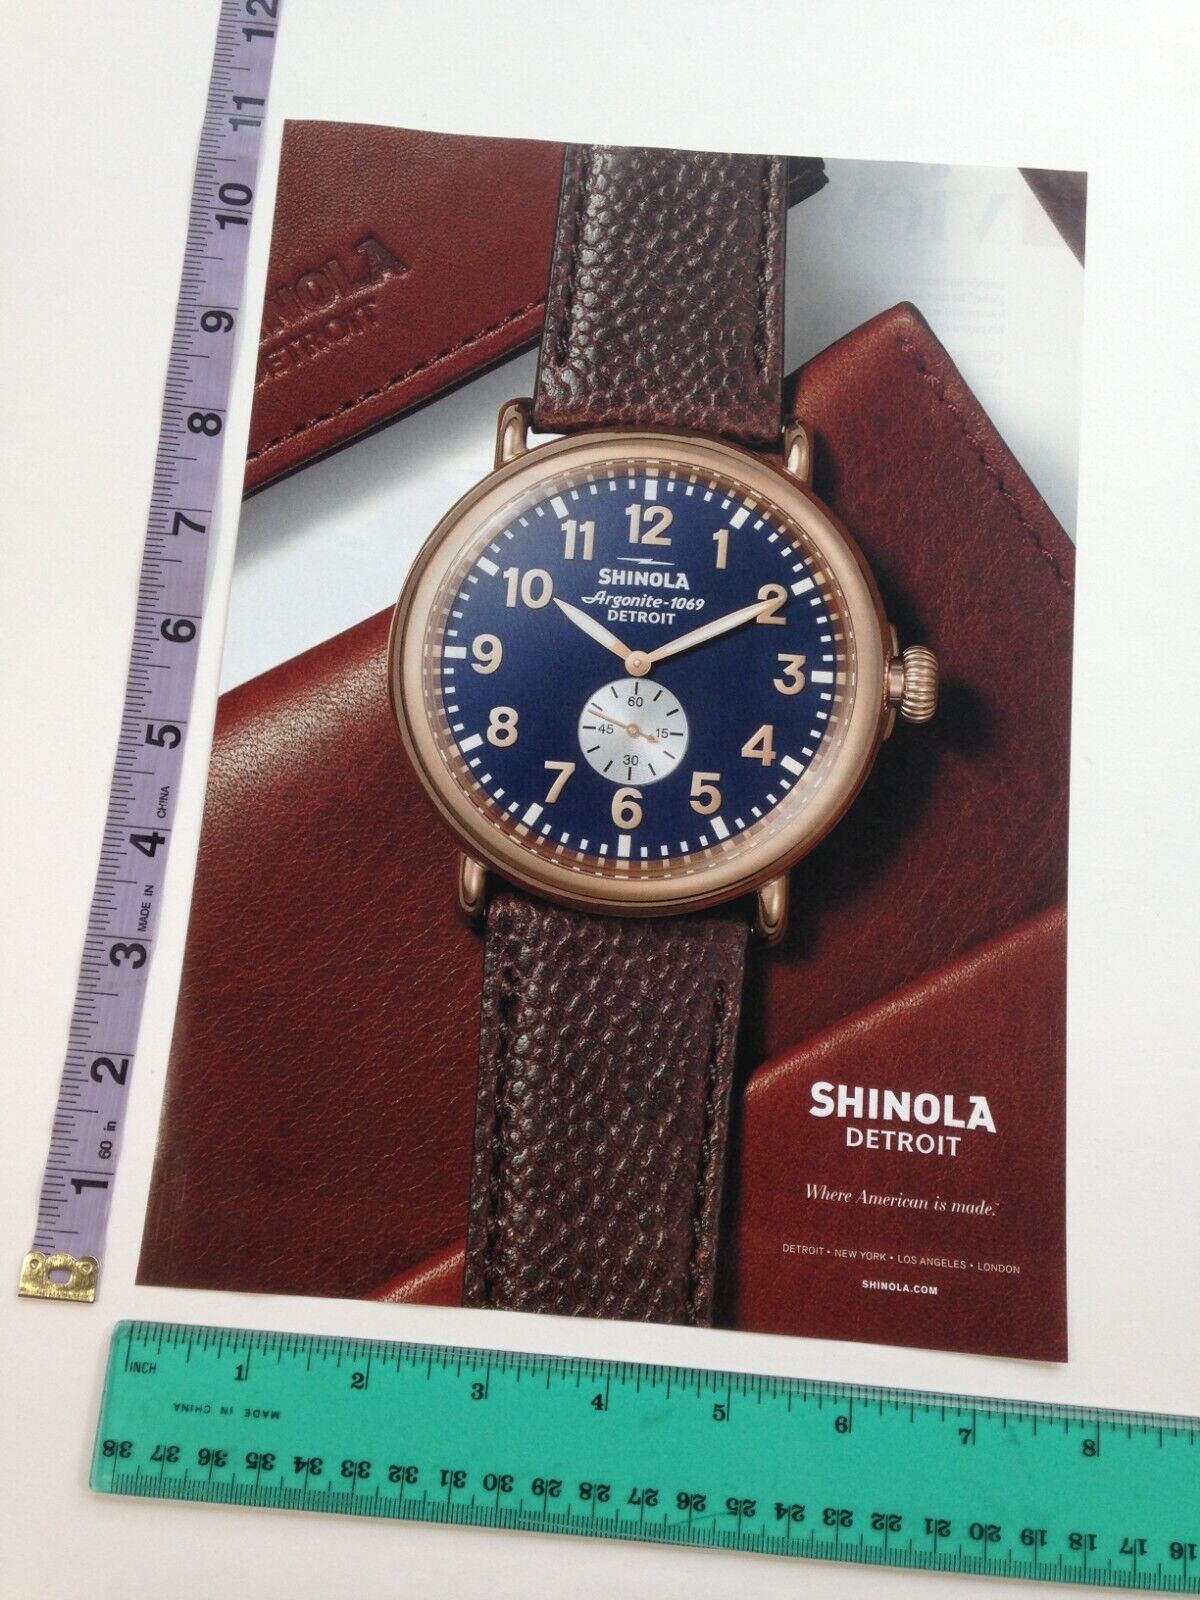 clipping - Shinola Detroit Argonite 1069 Watch wristwatch photo Print Ad